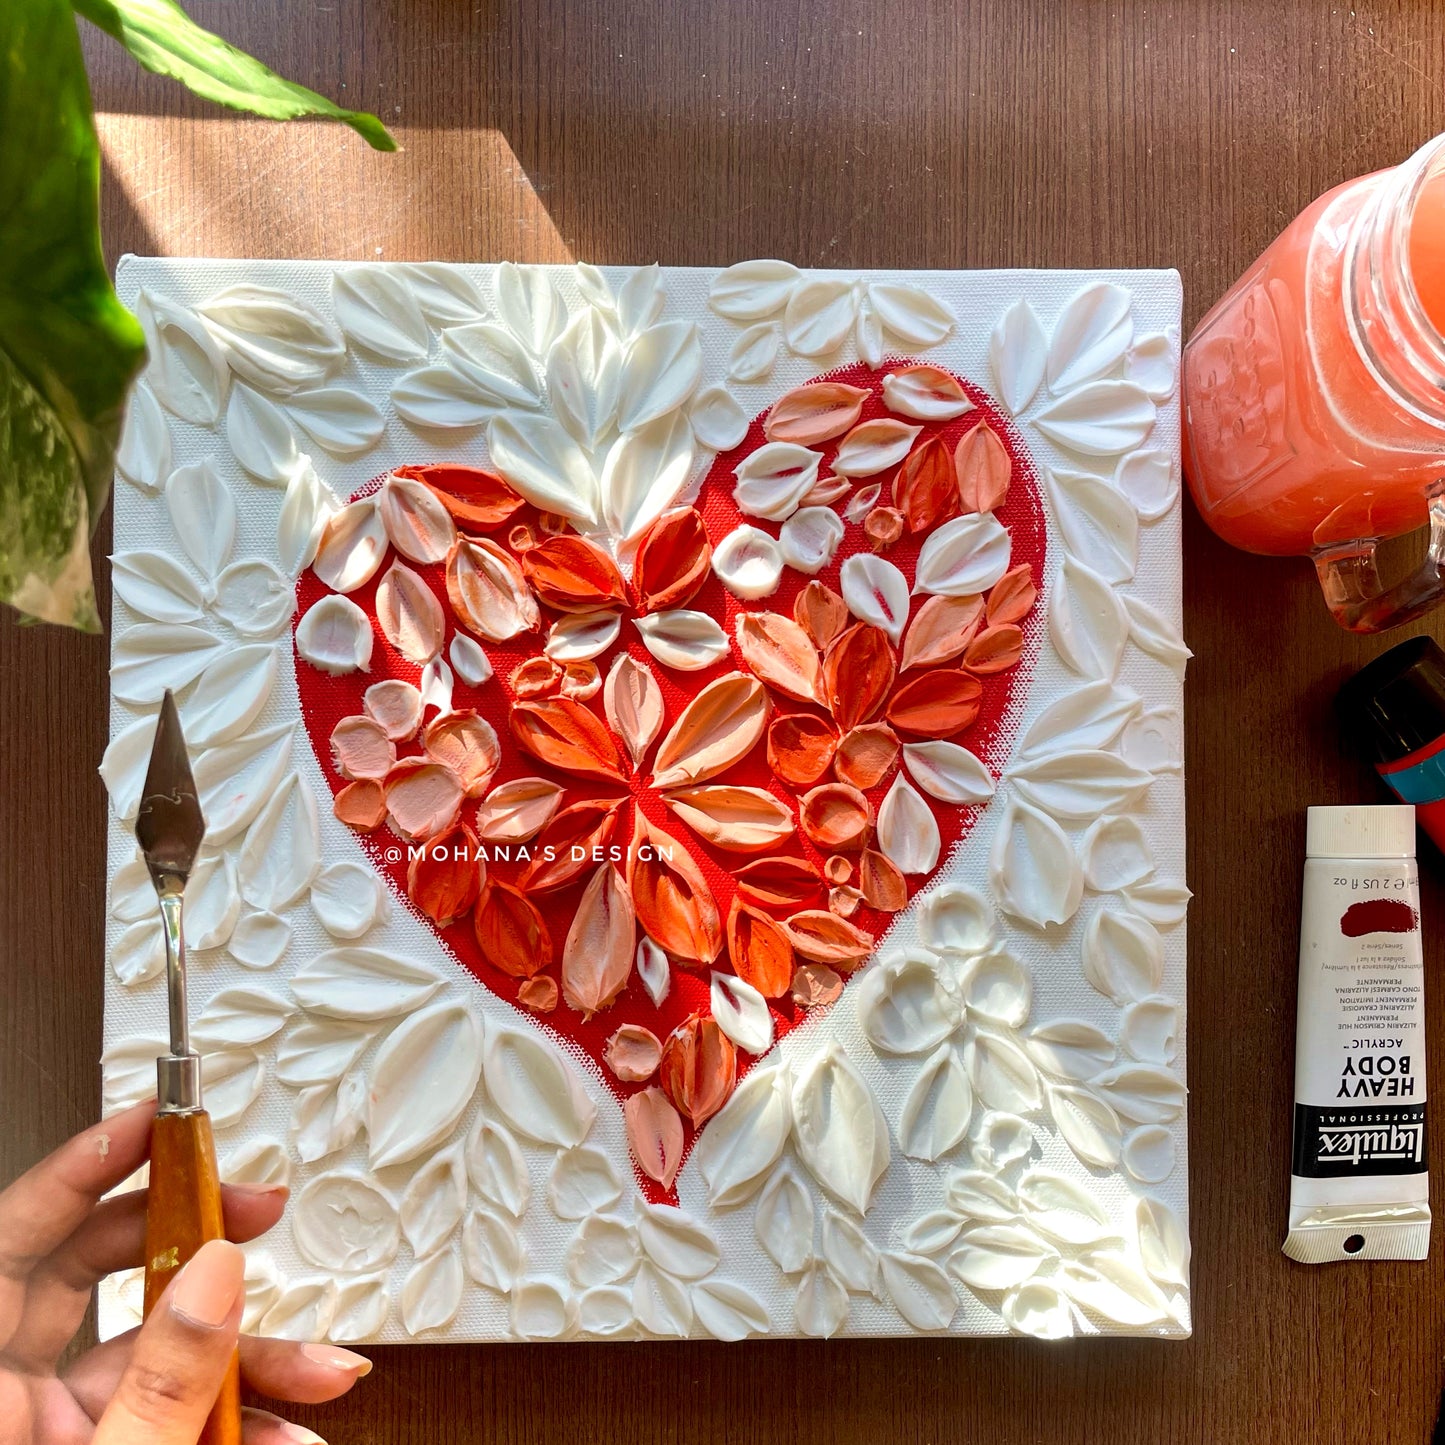 Pristine Heart ~ Textured Art (12" x 12" inches)